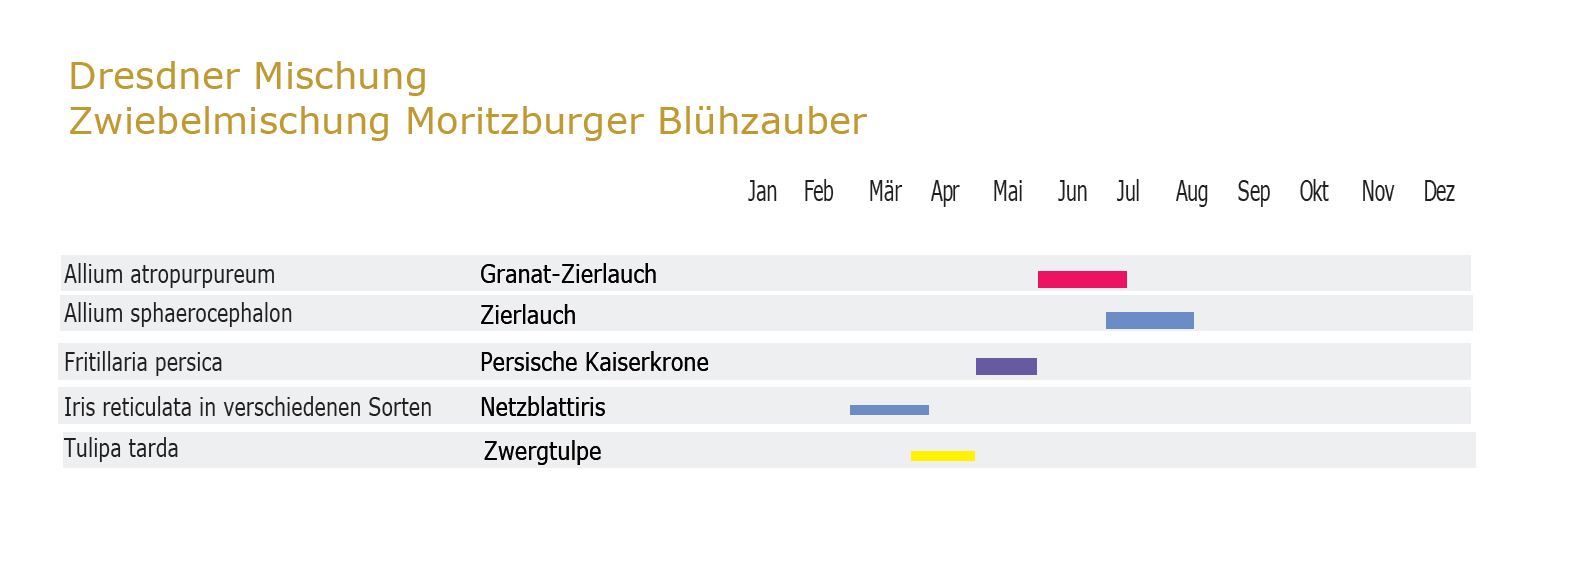 Moritzburger Blühzauber - Zwiebel-und Knollenmischung